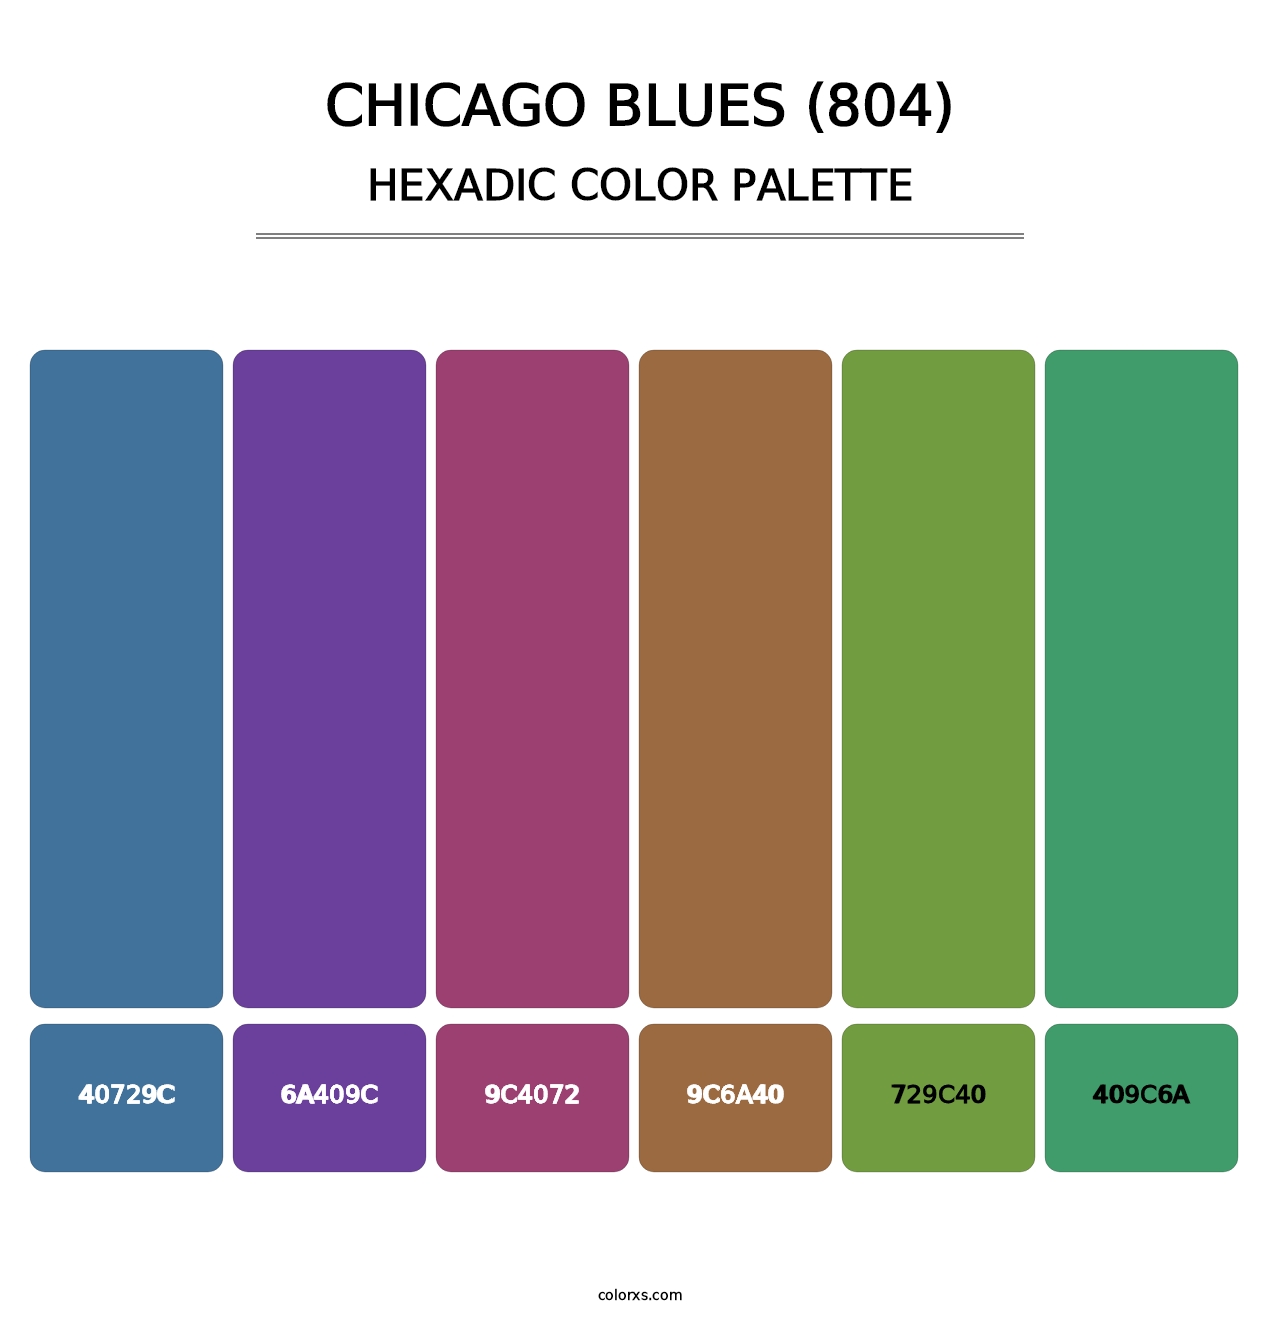 Chicago Blues (804) - Hexadic Color Palette